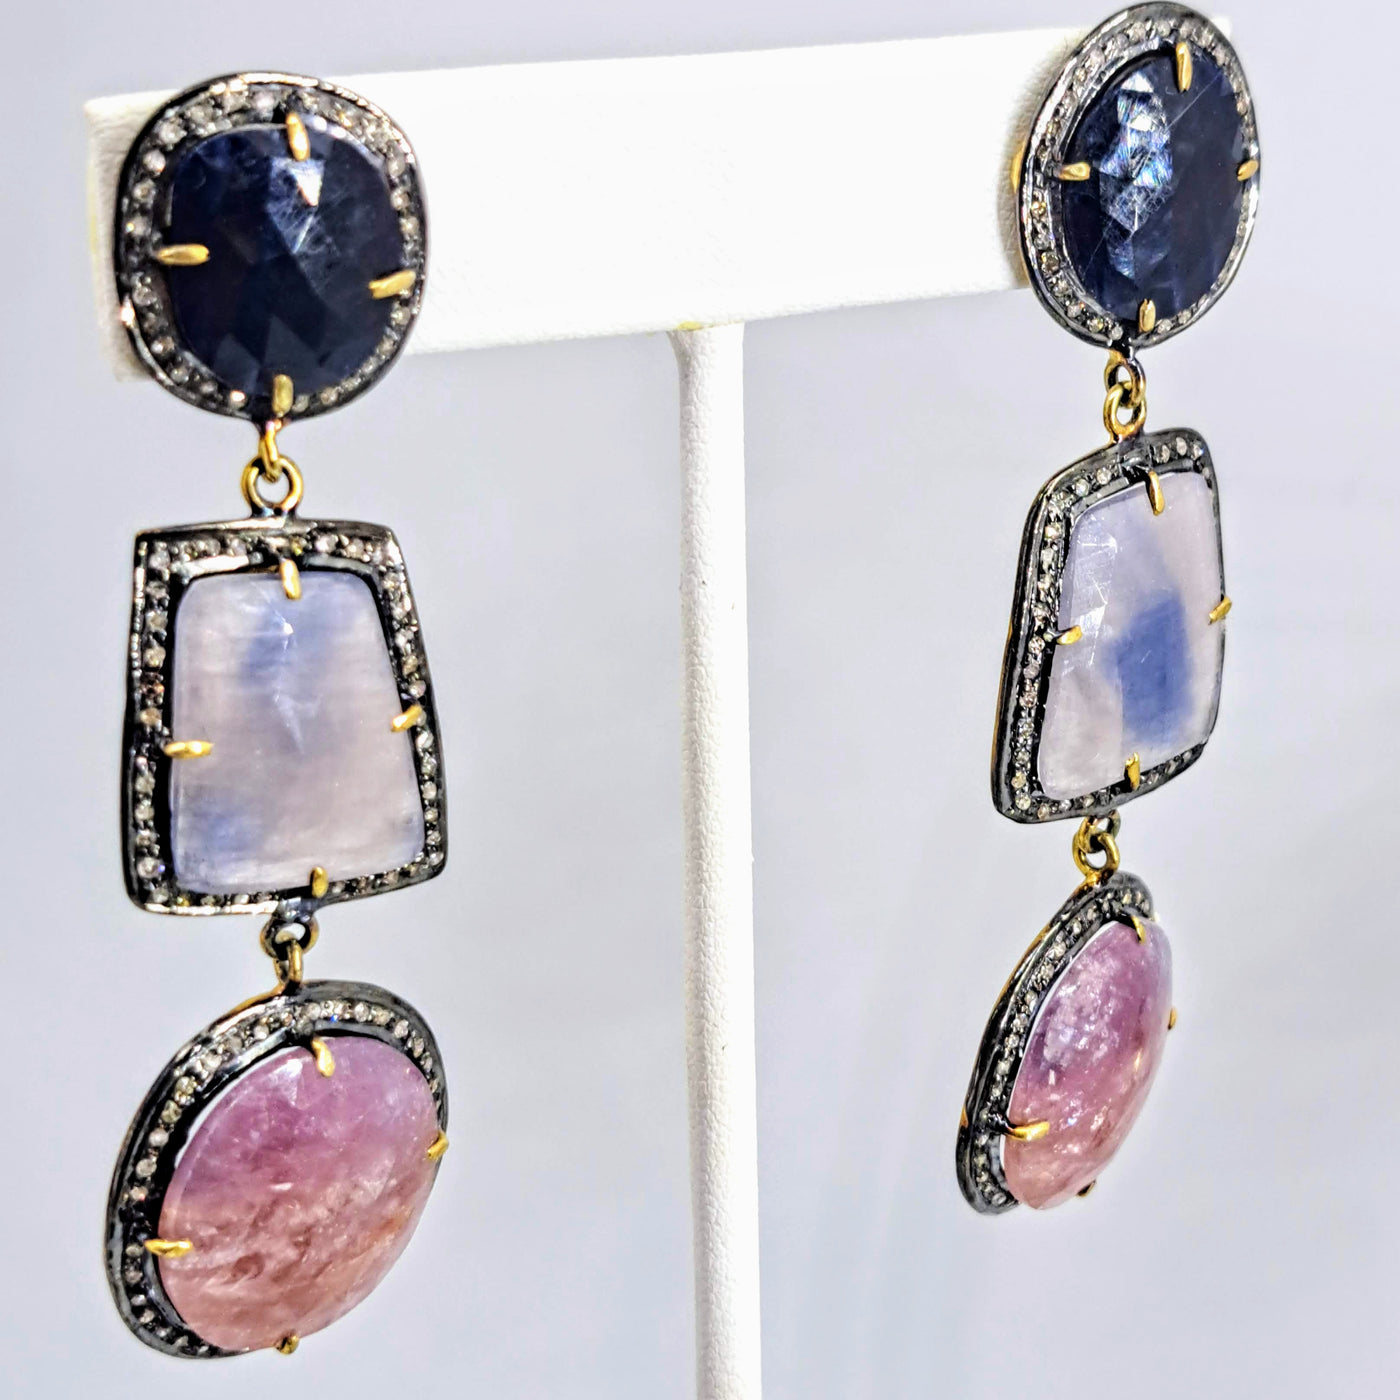 "Twilight Surprise" 2.75" Earrings - Sapphire, Diamonds, Sterling, 18k Gold Accents